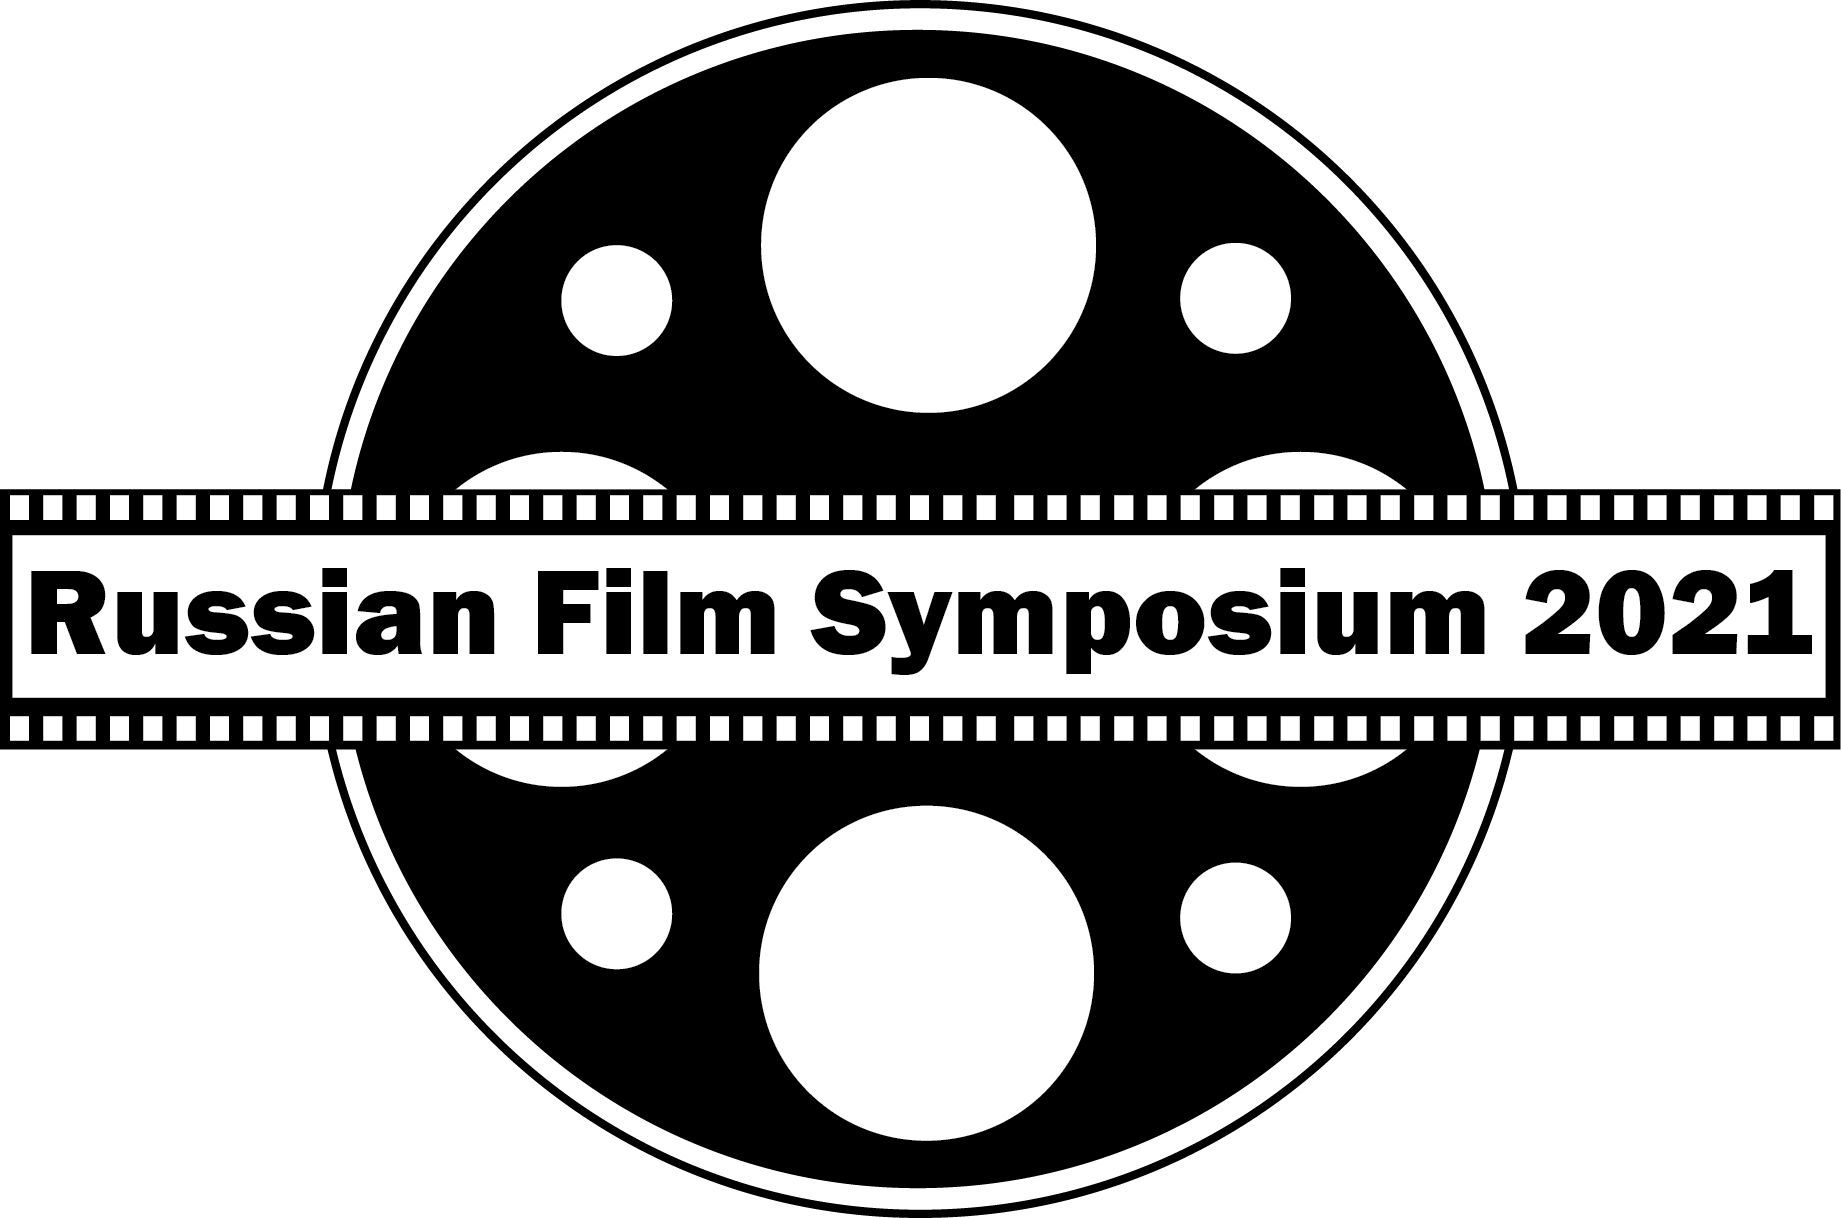 Russian Film Symposium 2021: Representation and the Reel